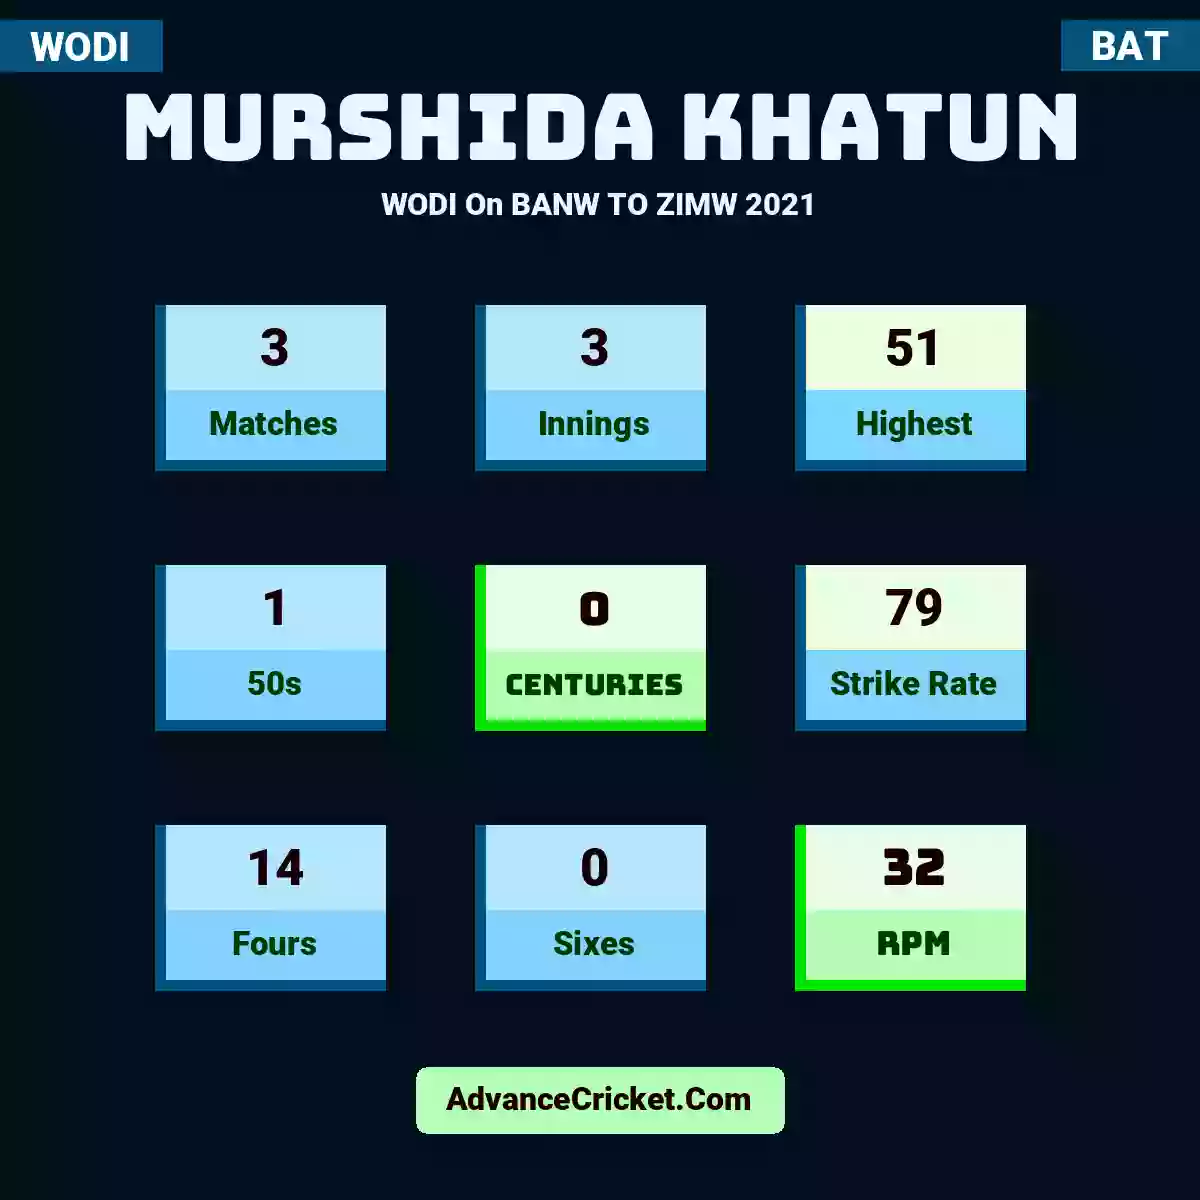 Murshida Khatun WODI  On BANW TO ZIMW 2021, Murshida Khatun played 3 matches, scored 51 runs as highest, 1 half-centuries, and 0 centuries, with a strike rate of 79. M.Khatun hit 14 fours and 0 sixes, with an RPM of 32.